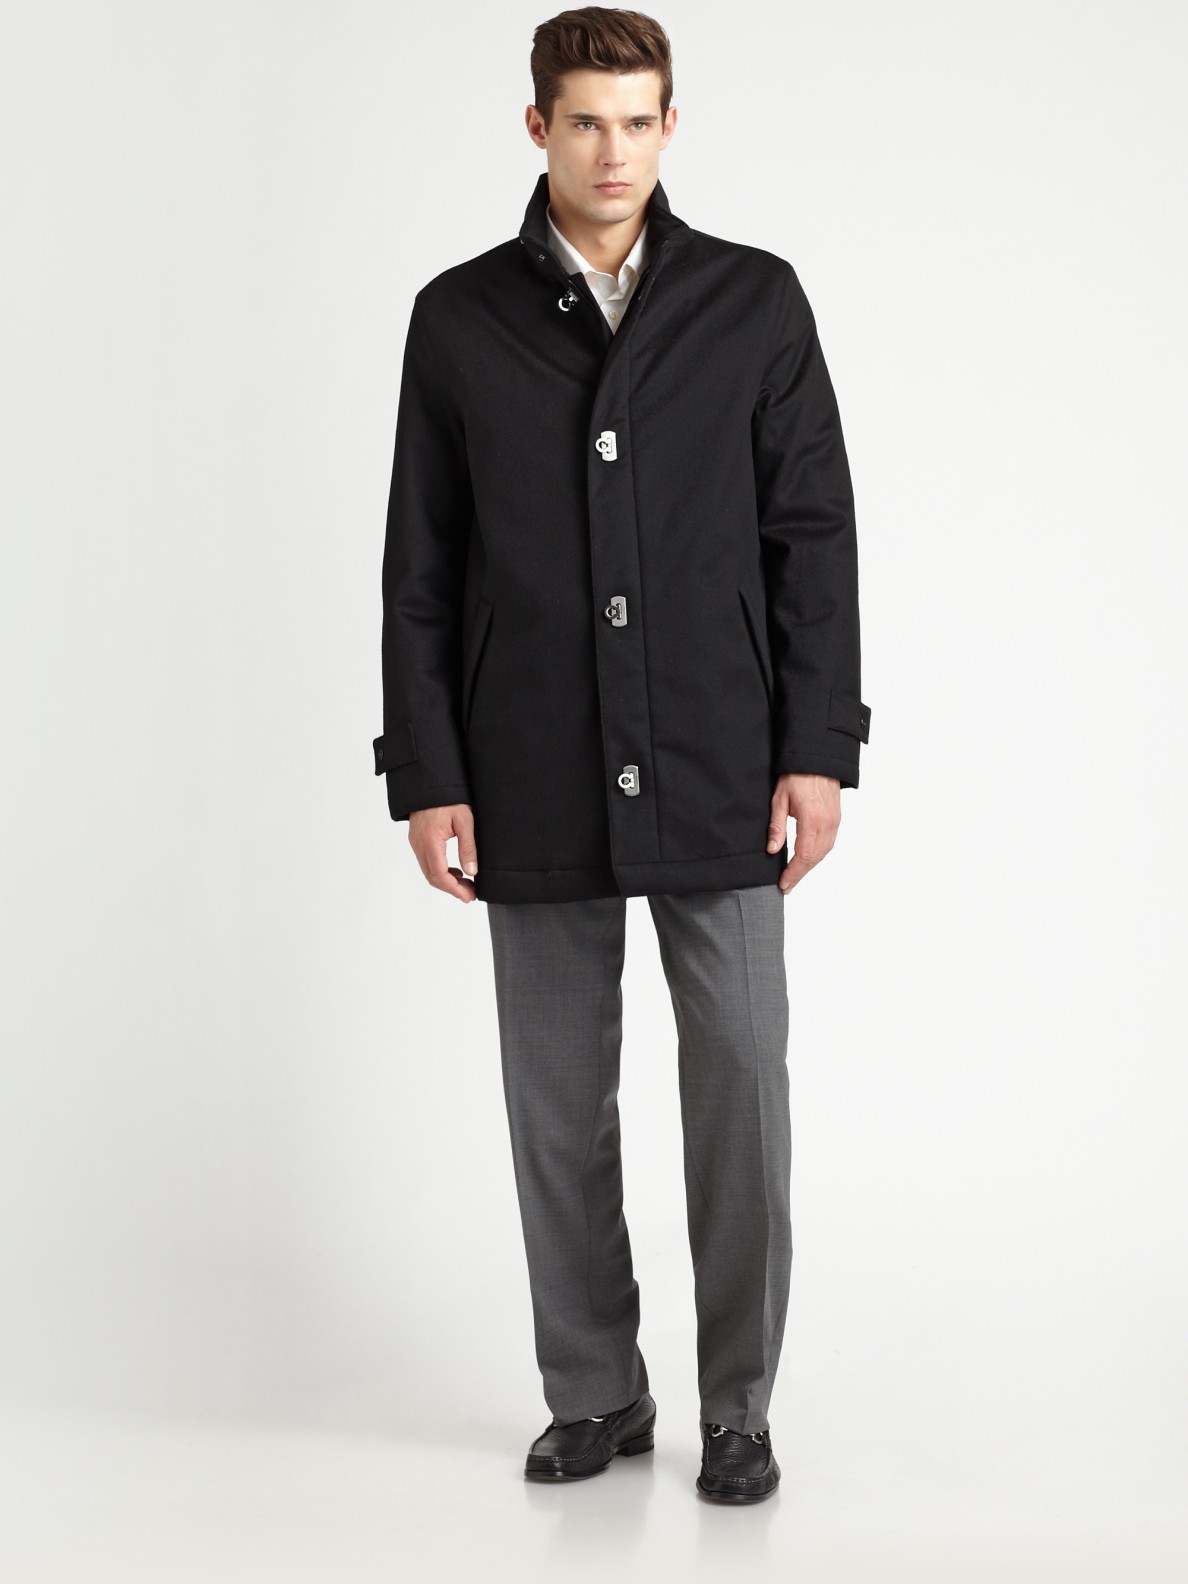 Ferragamo Wool/cashmere Car Coat in Black for Men - Lyst